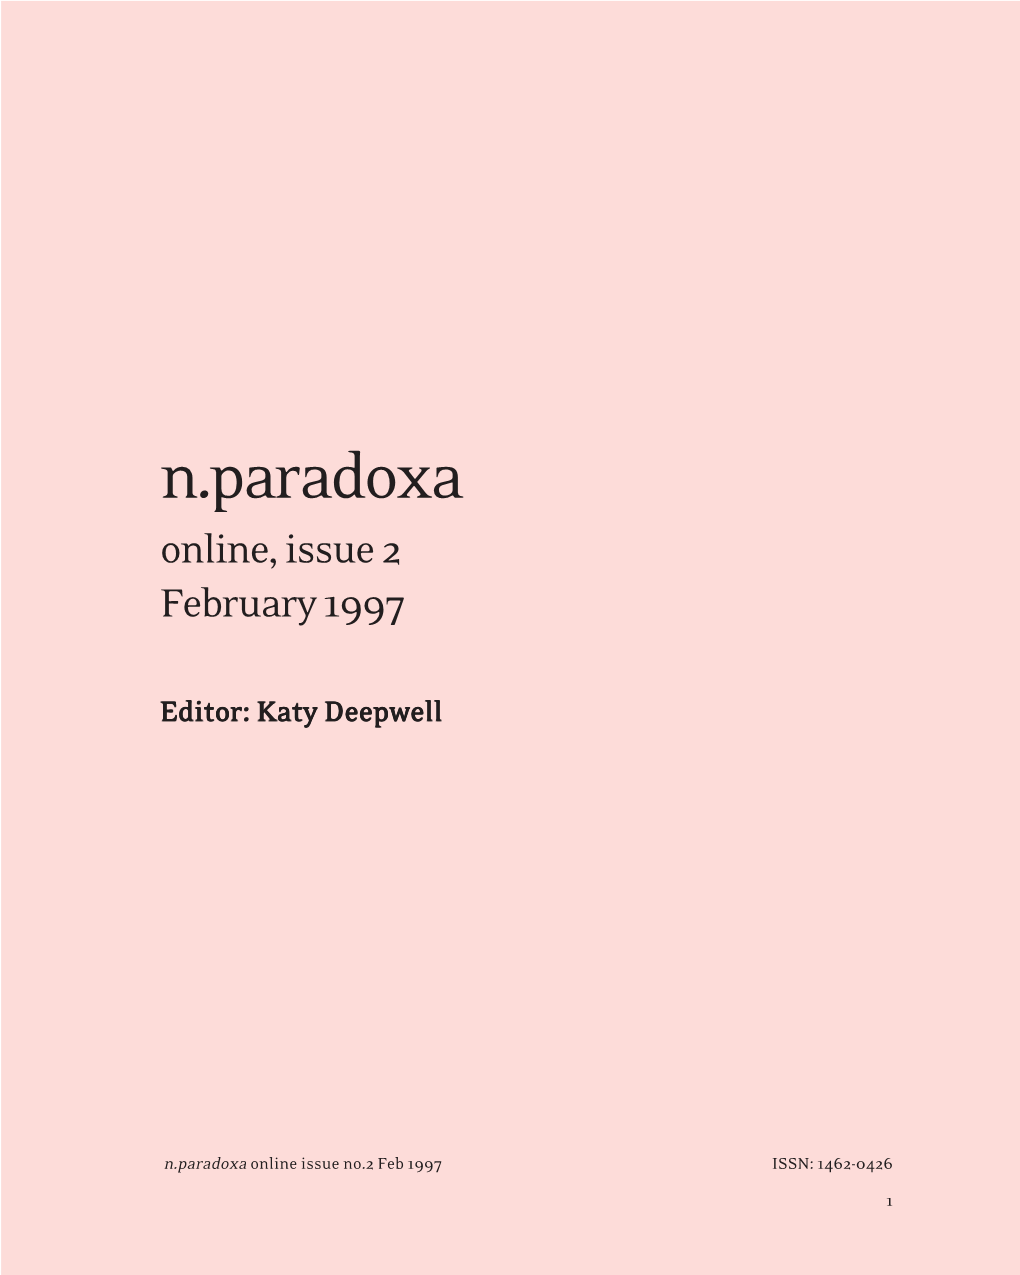 N.Paradoxa Online Issue 2, Feb 1997